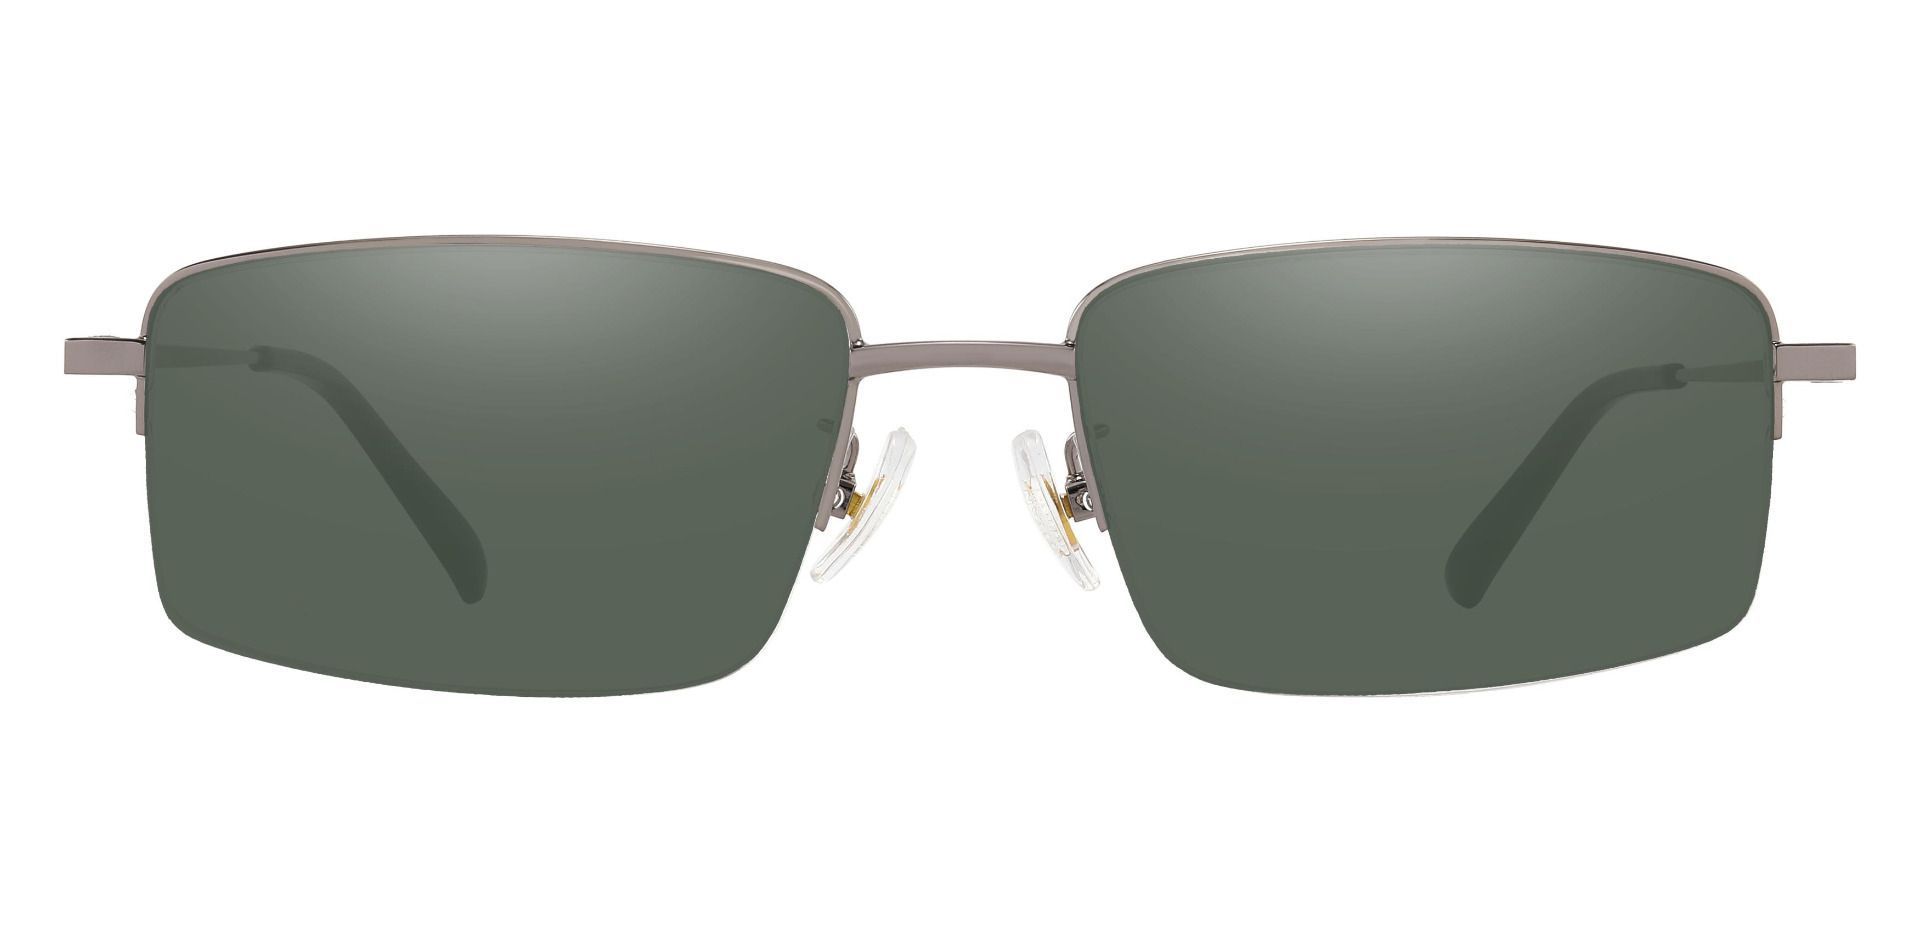 Wayne Rectangle Progressive Sunglasses - Gray Frame With Green Lenses